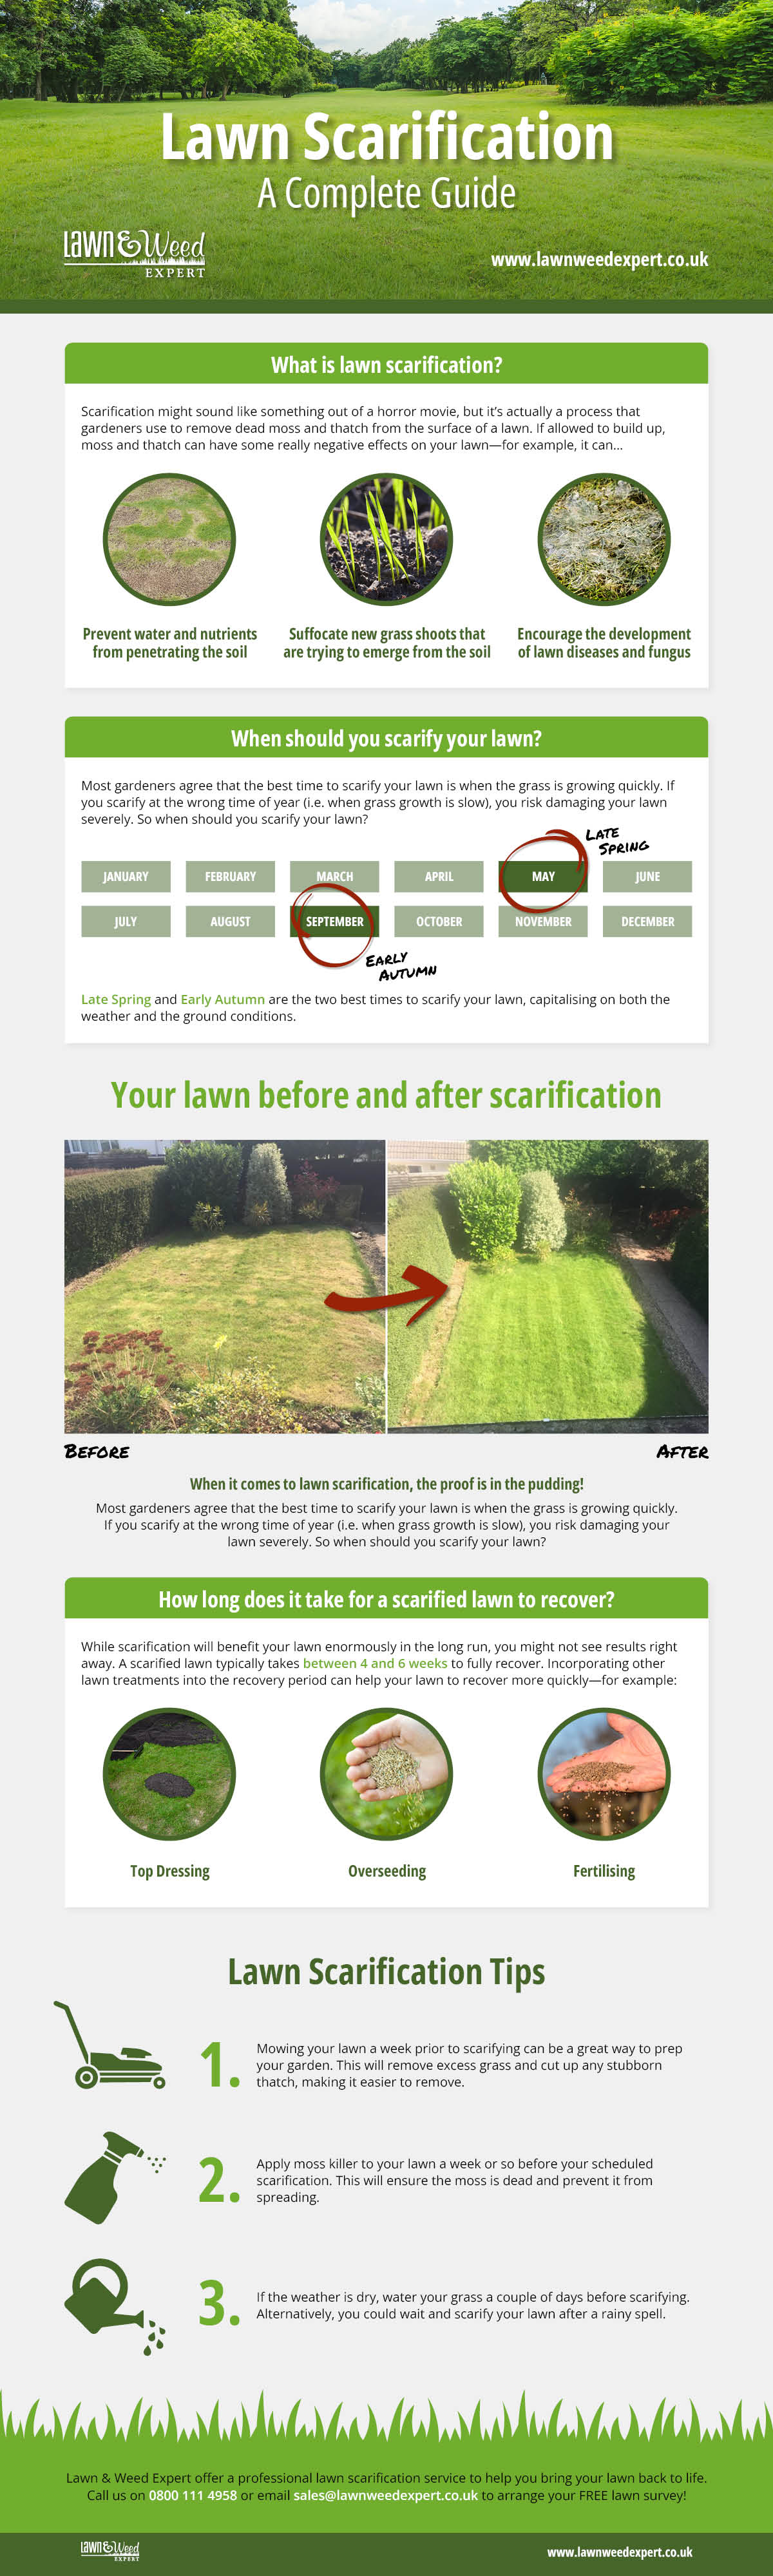 Lawn Scarification: A Complete Guide